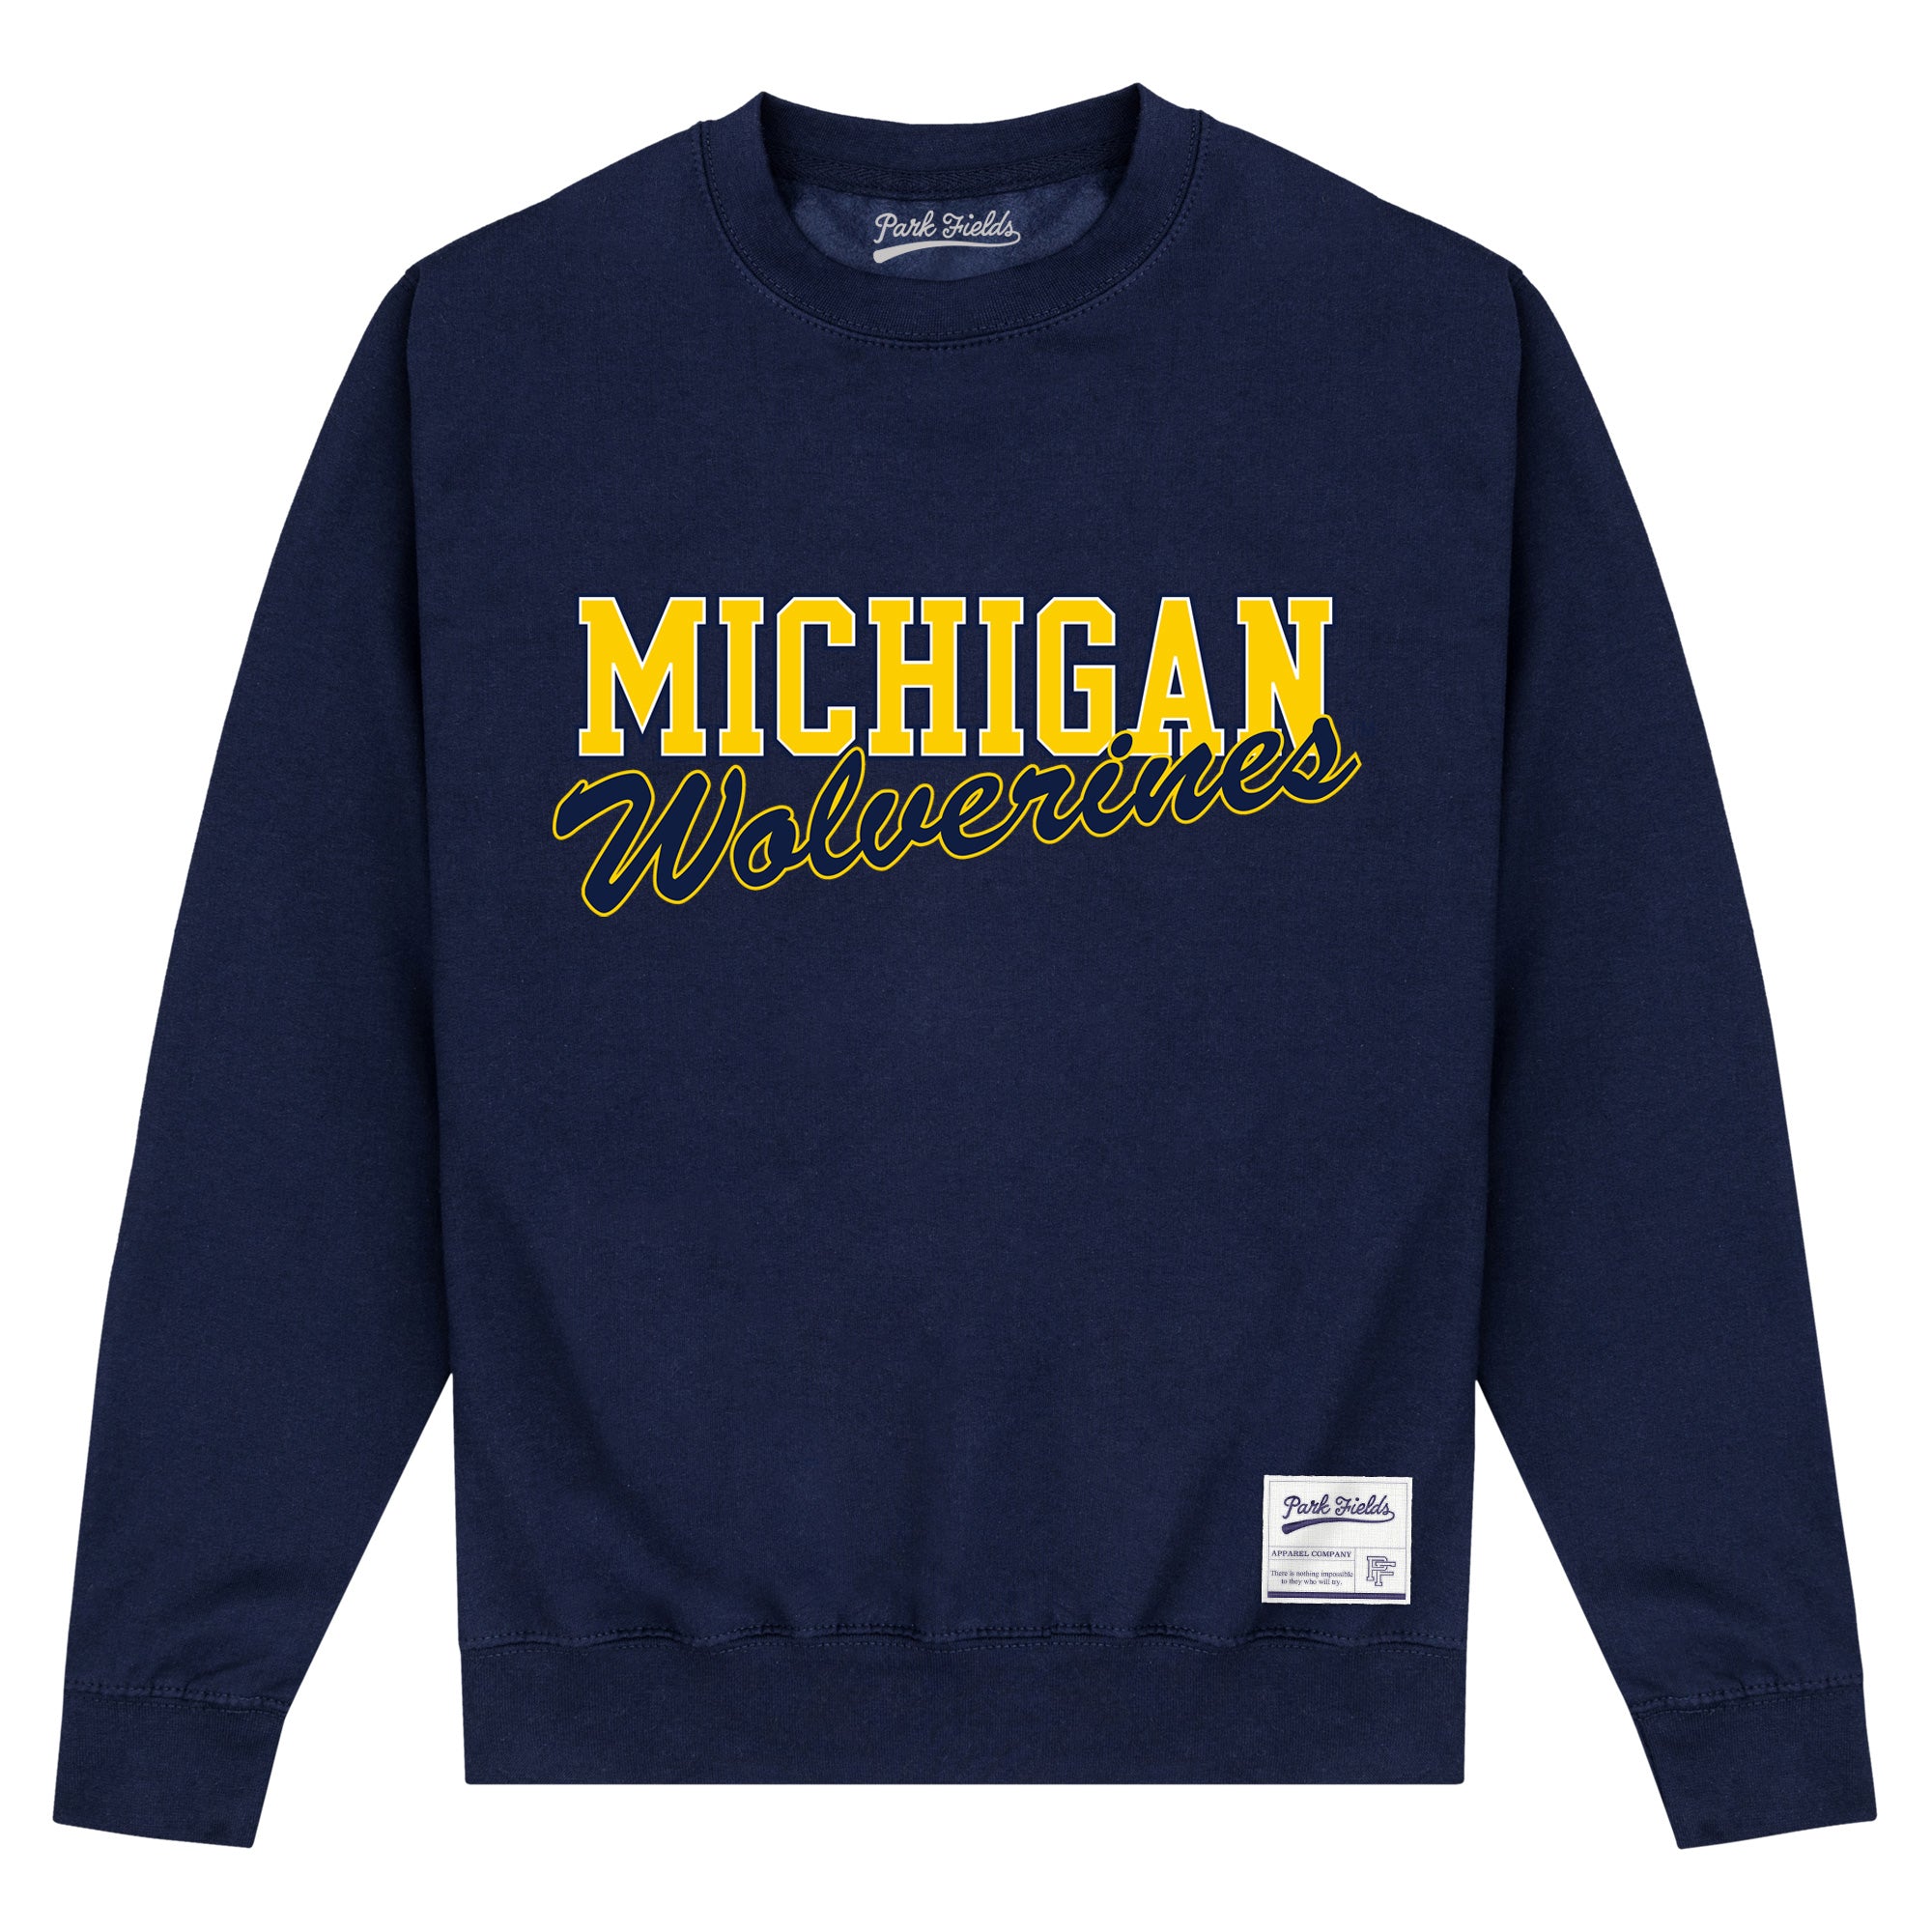 Michigan Wolverines Navy Sweatshirt